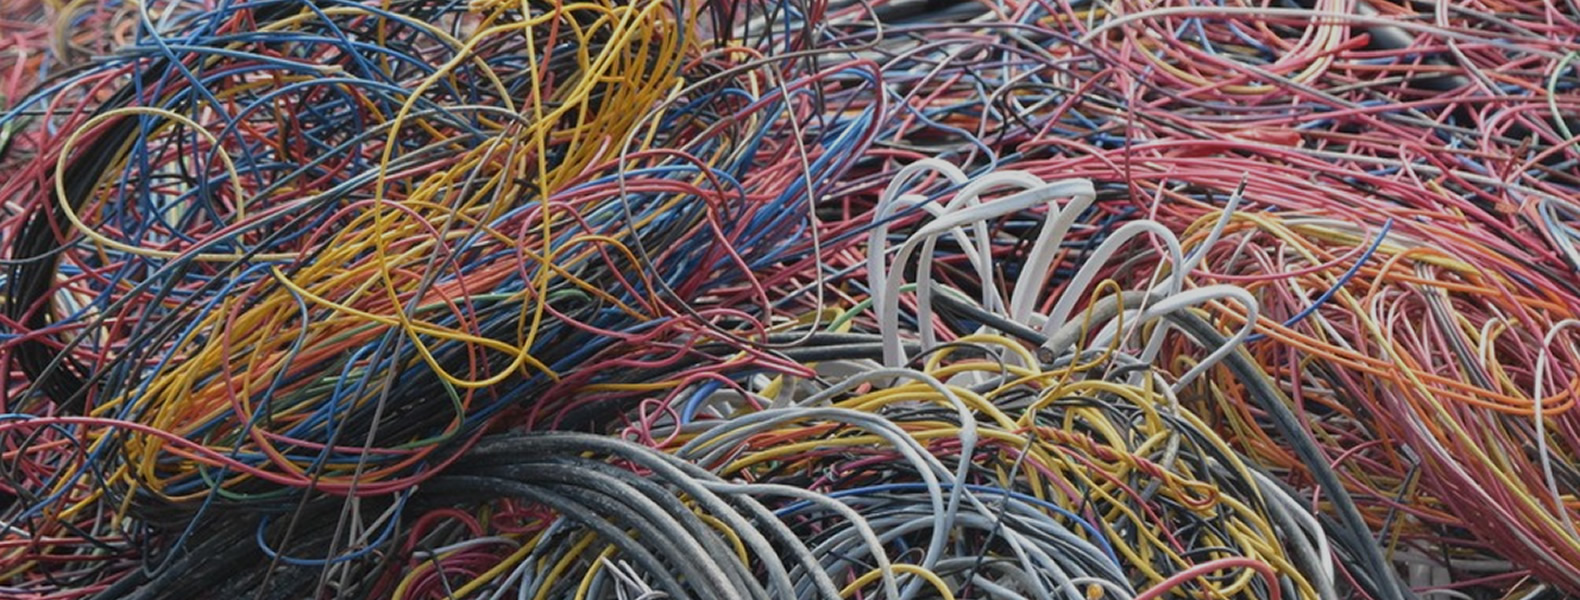 wire-mess.jpg